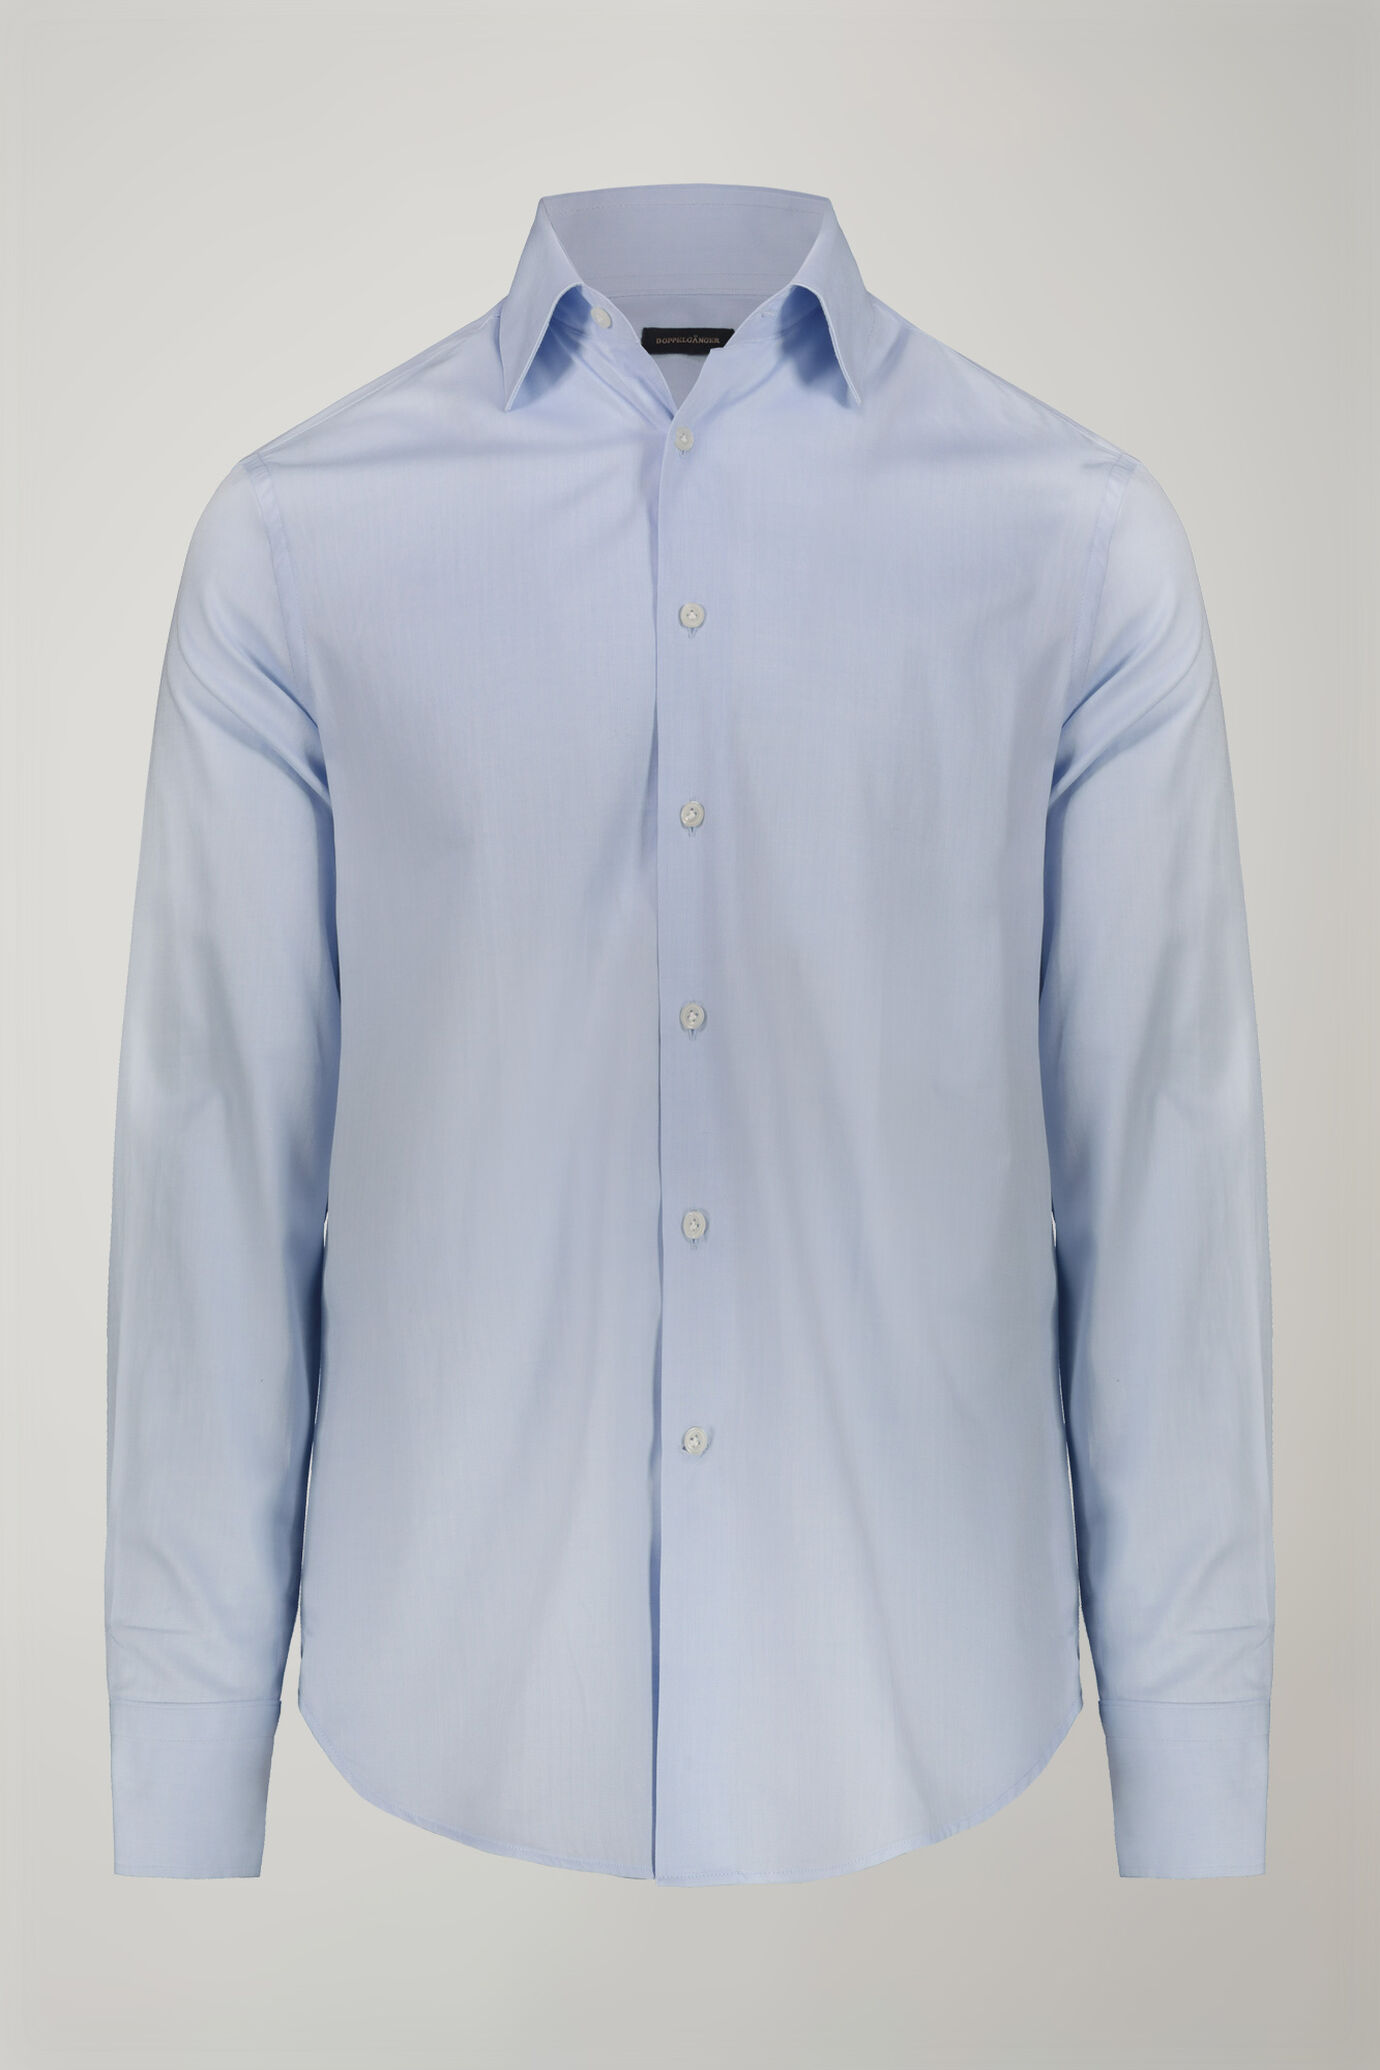 Men's shirt classic collar 100% cotton herringbone fabric plain regular fit image number 5